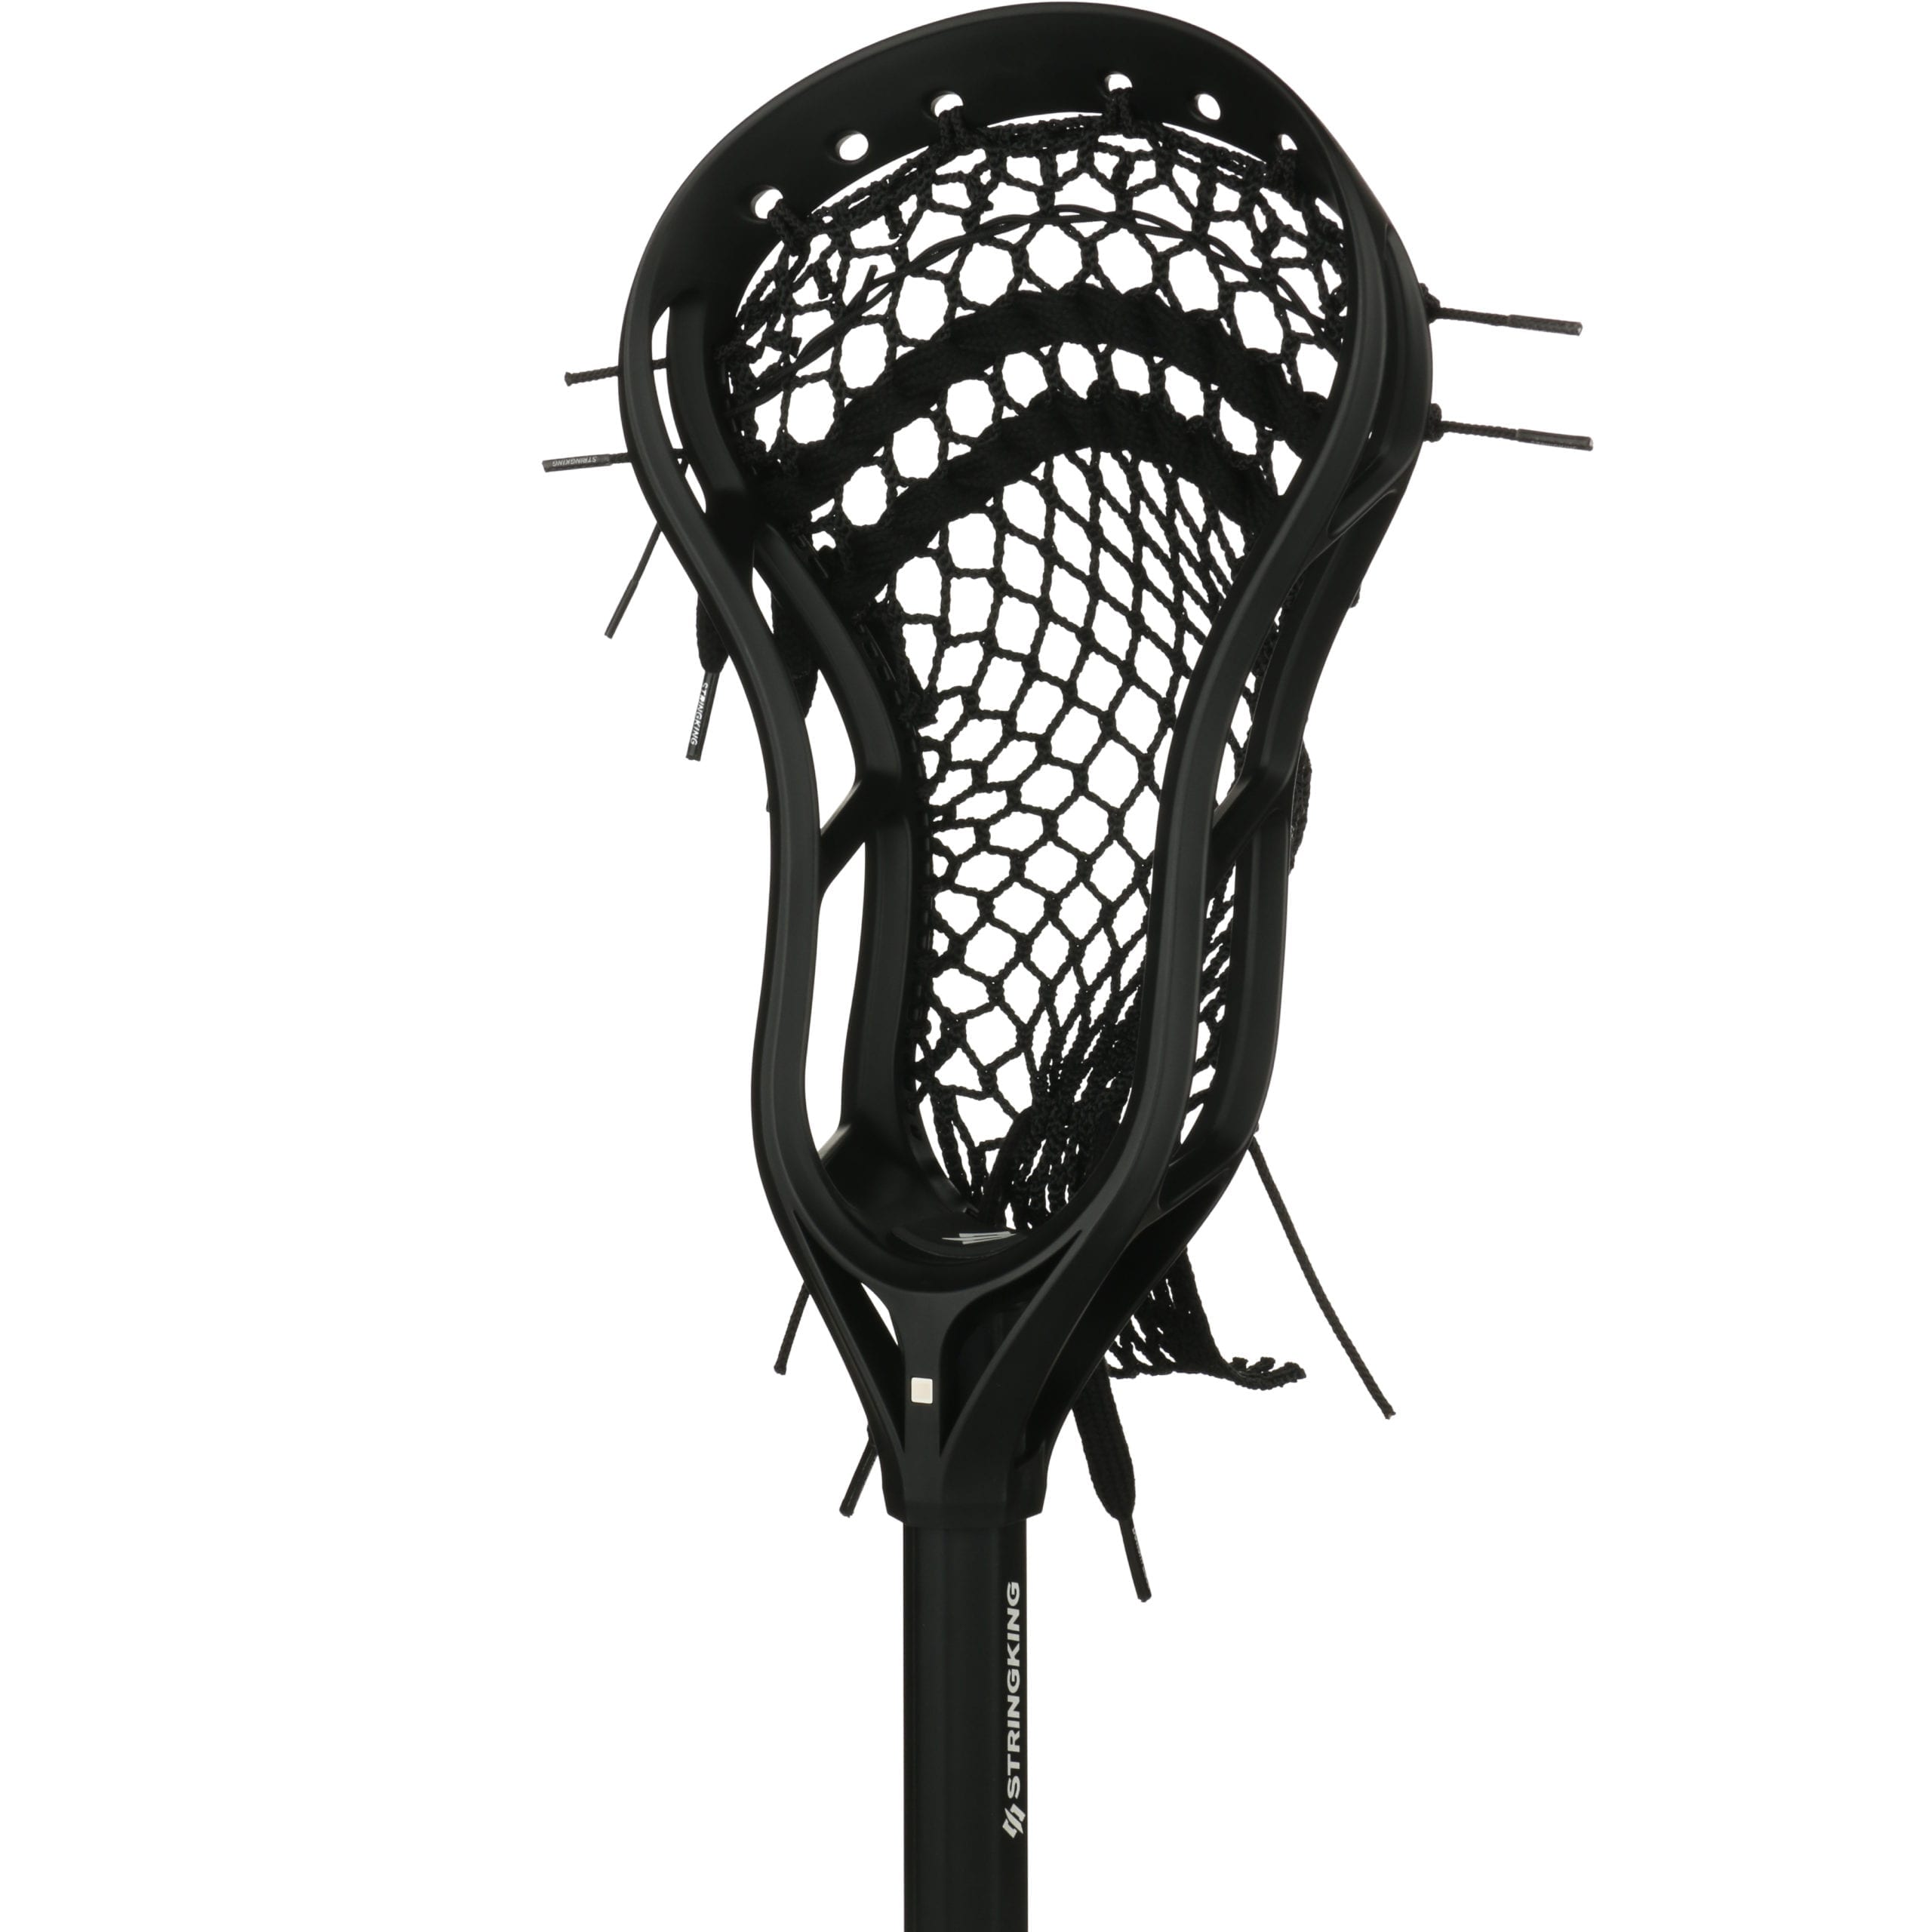 StringKing-Complete-2-SR-Lacrosse-Stick-Black-Black-Angle_4000-scaled-1.jpg